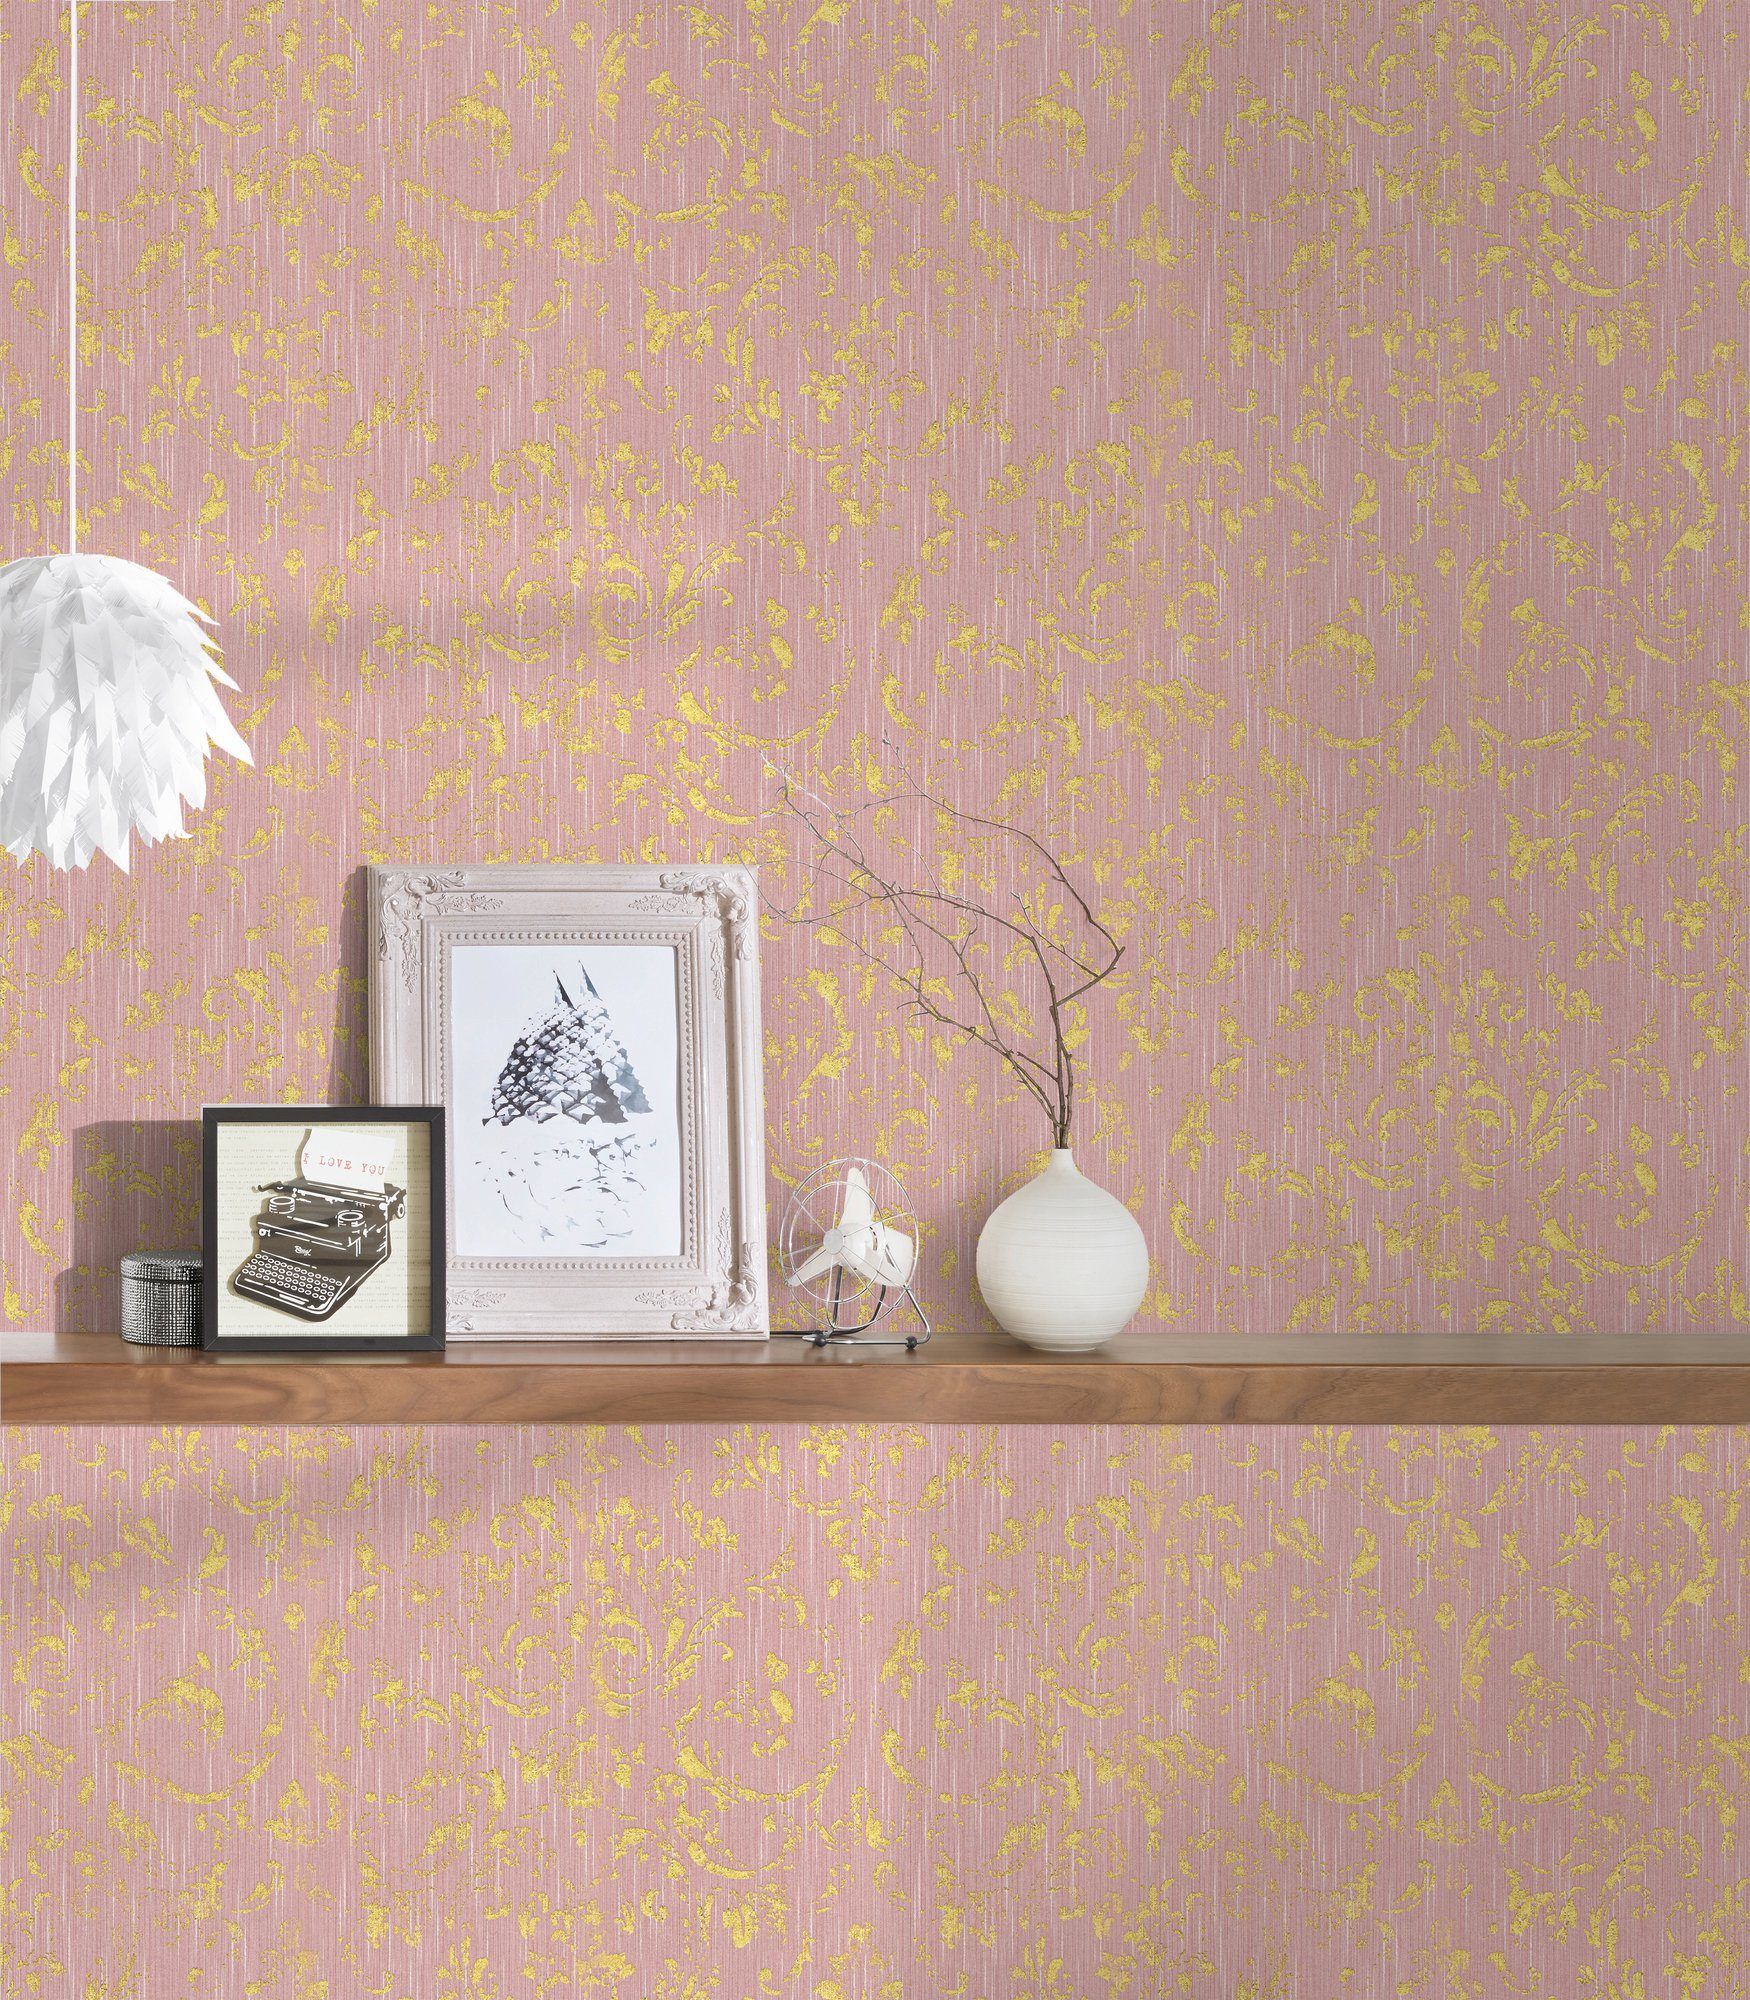 Textiltapete Paper Ornament Barock, Silk, Architects Tapete matt, rosa/gold A.S. Barock Création glänzend, Metallic samtig,